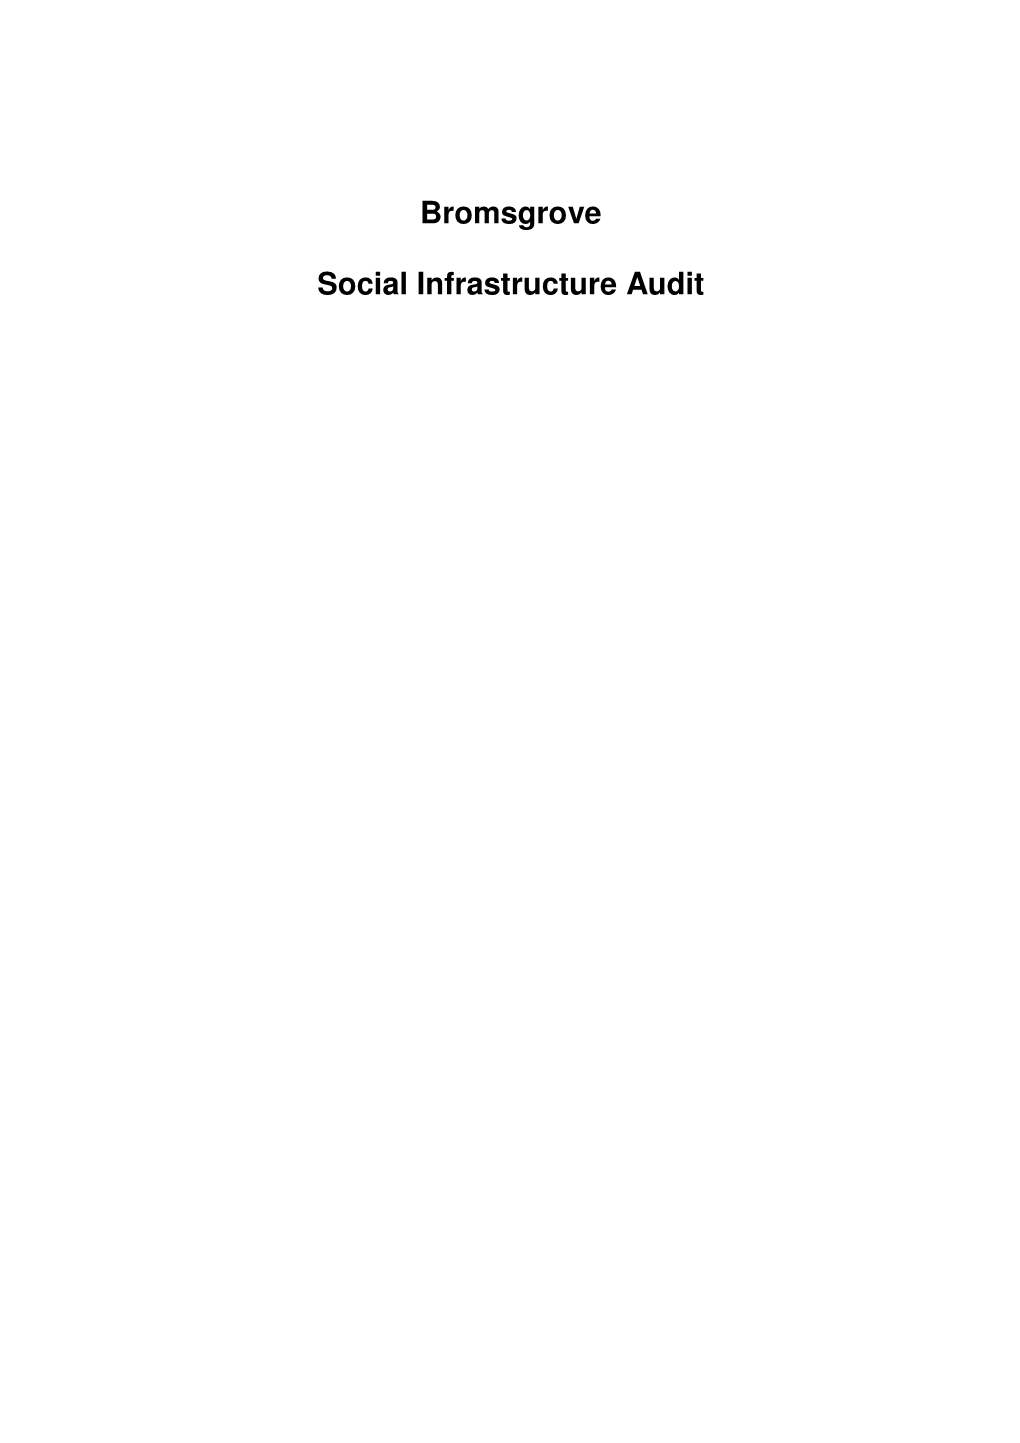 Bromsgrove Social Infrastructure Audit